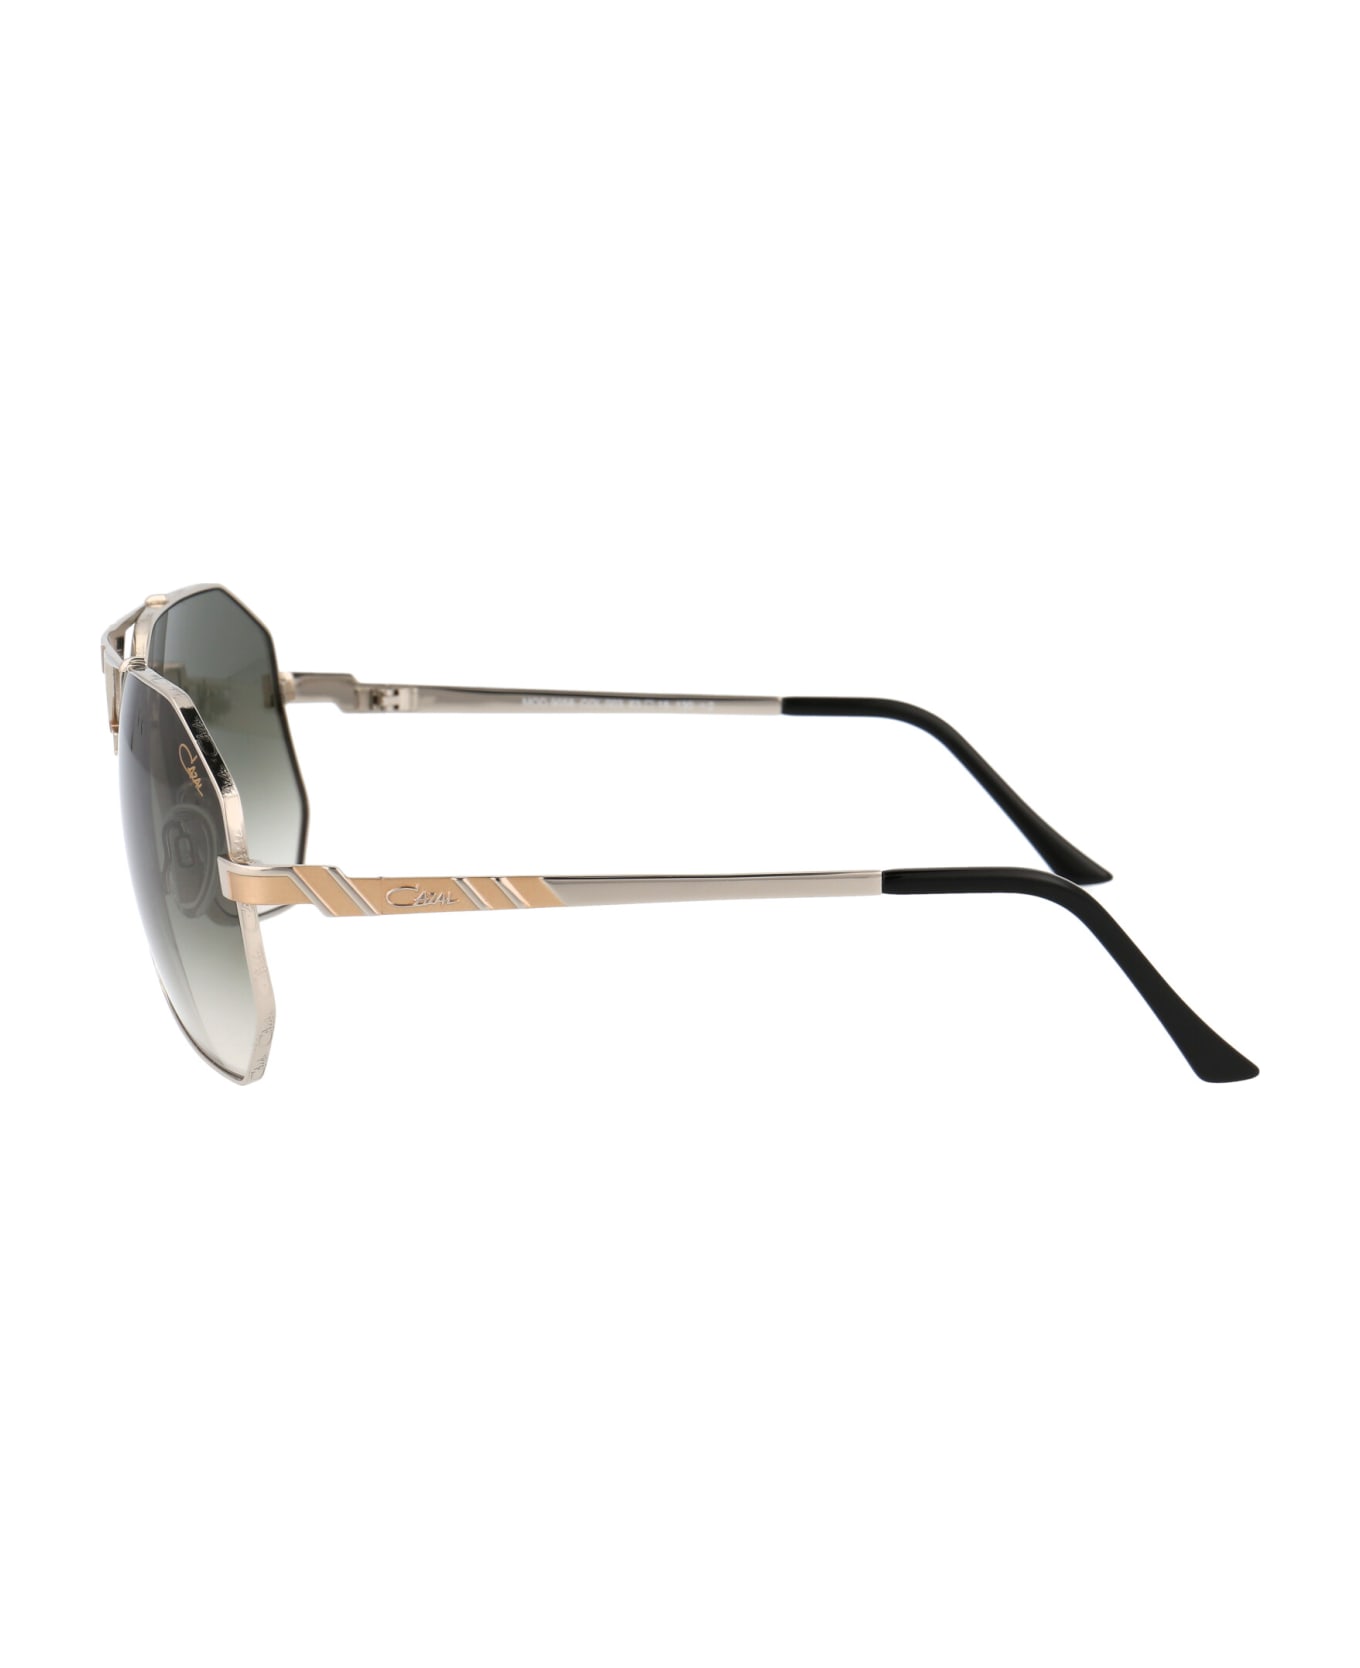 Cazal Mod. 9058 Sunglasses - 003 SILVER